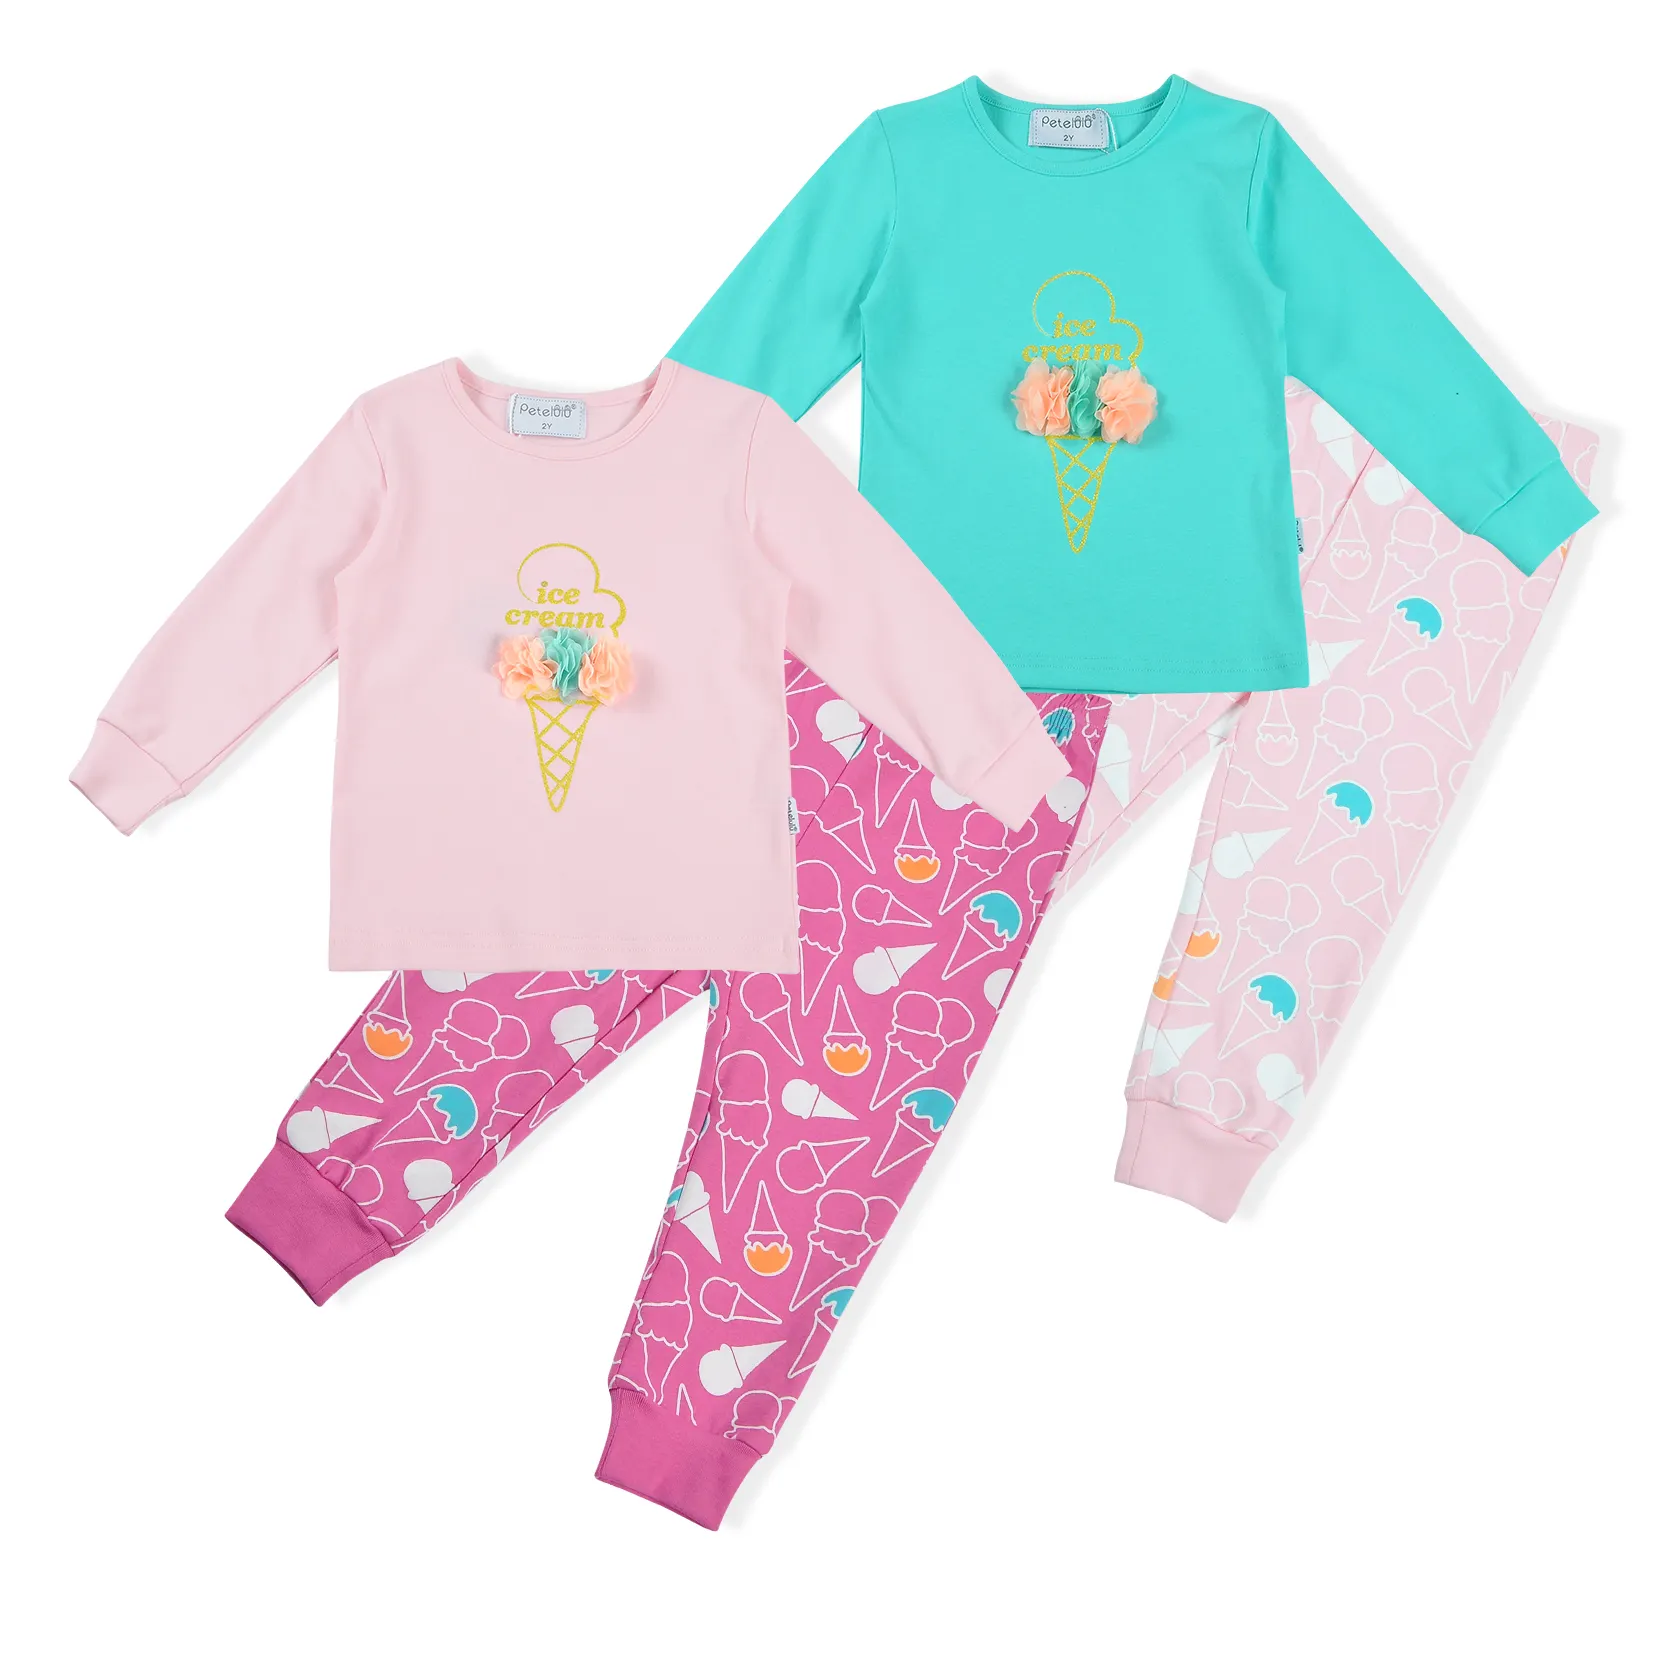 Pijamas de manga larga para niños, nuevo diseño, venta al por mayor, primavera y otoño